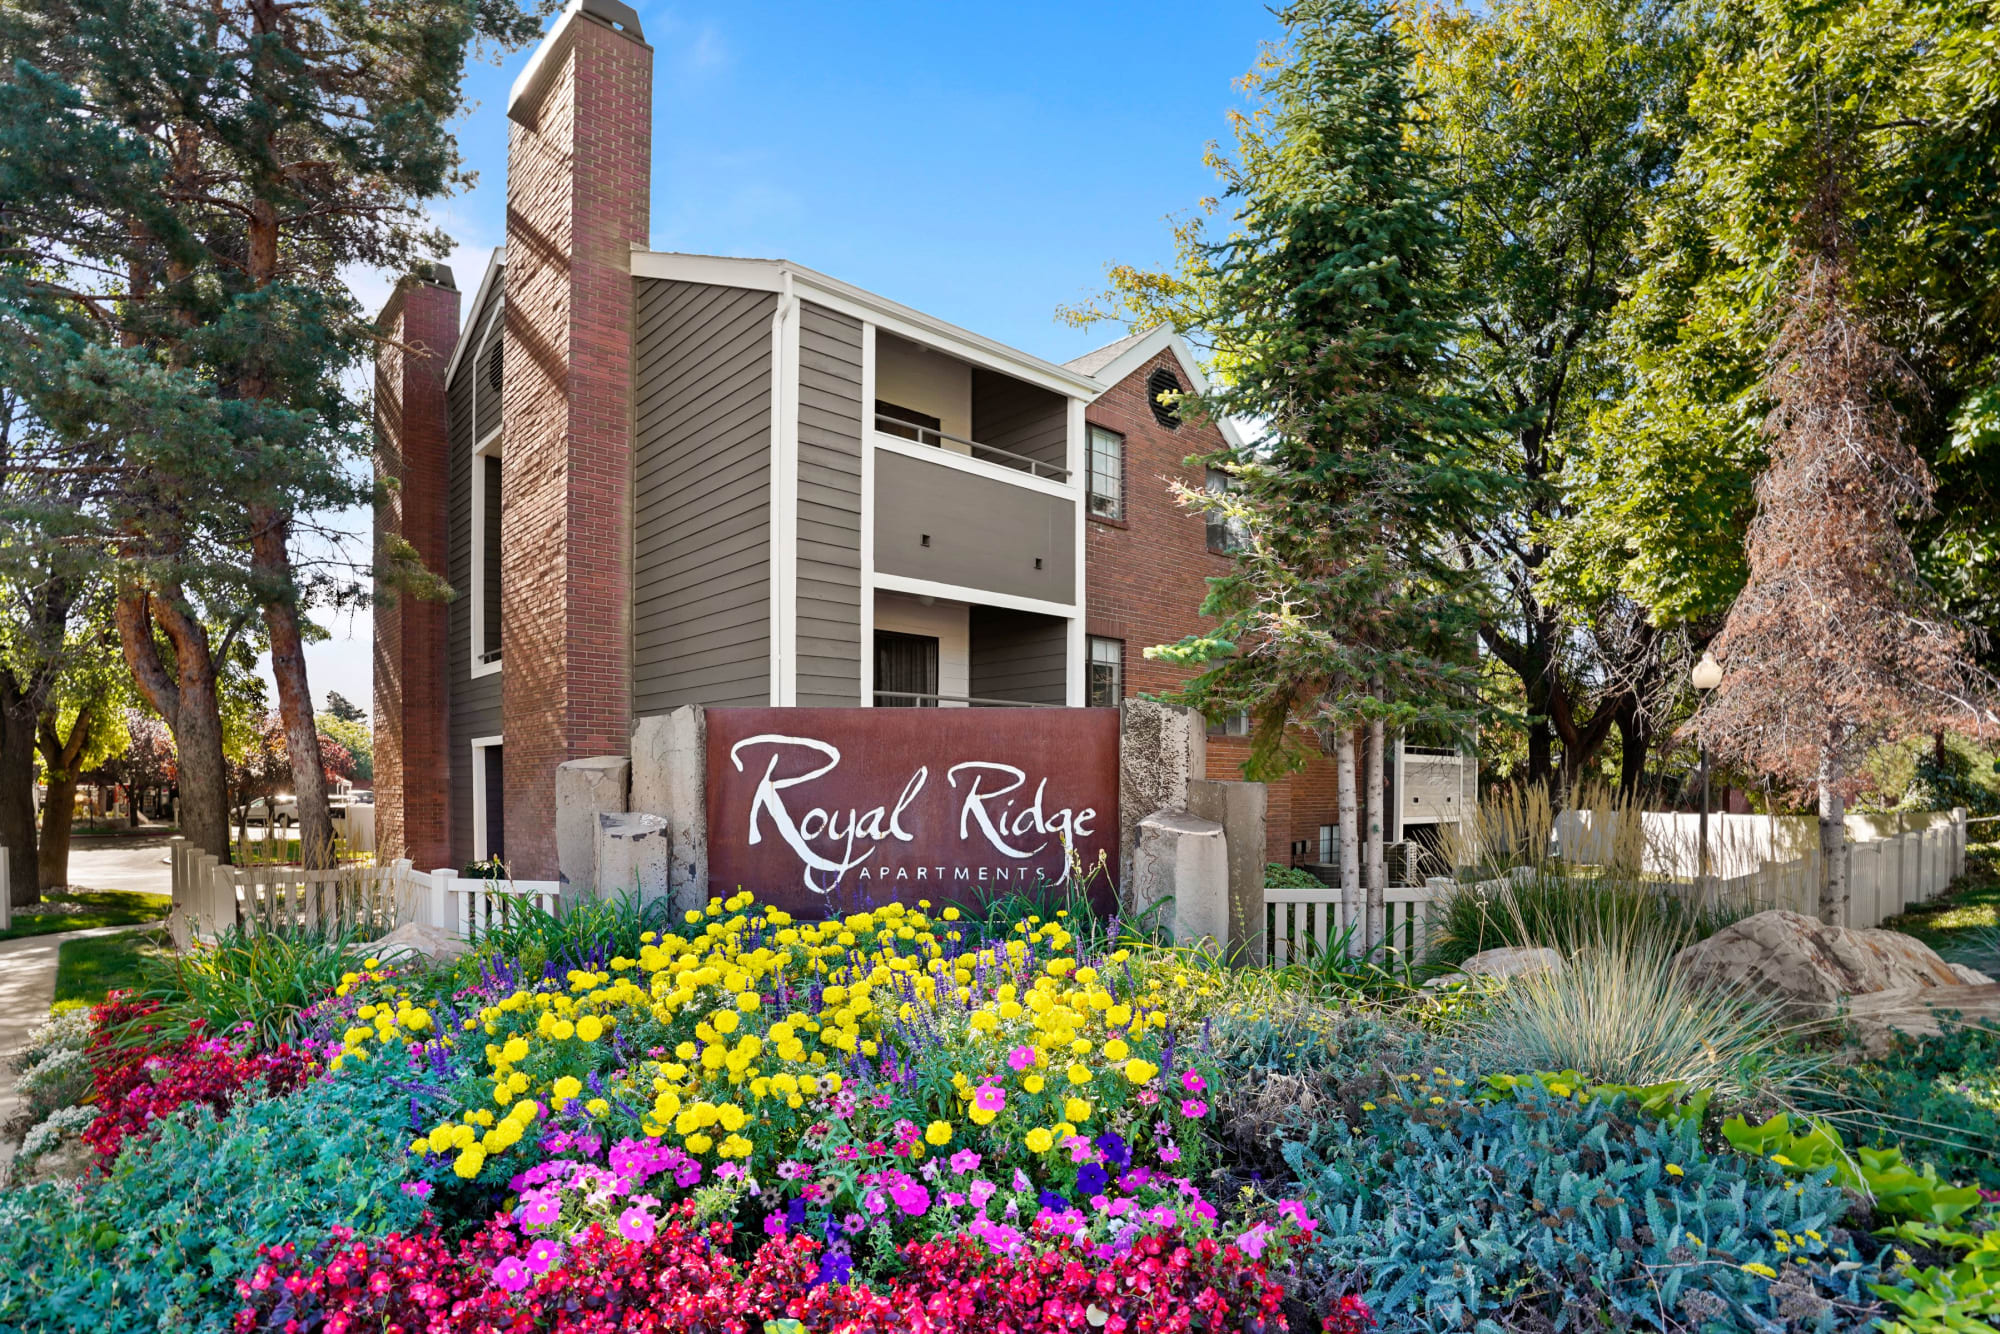 Monument sign for Royal Ridge Apartments in Midvale, Utah